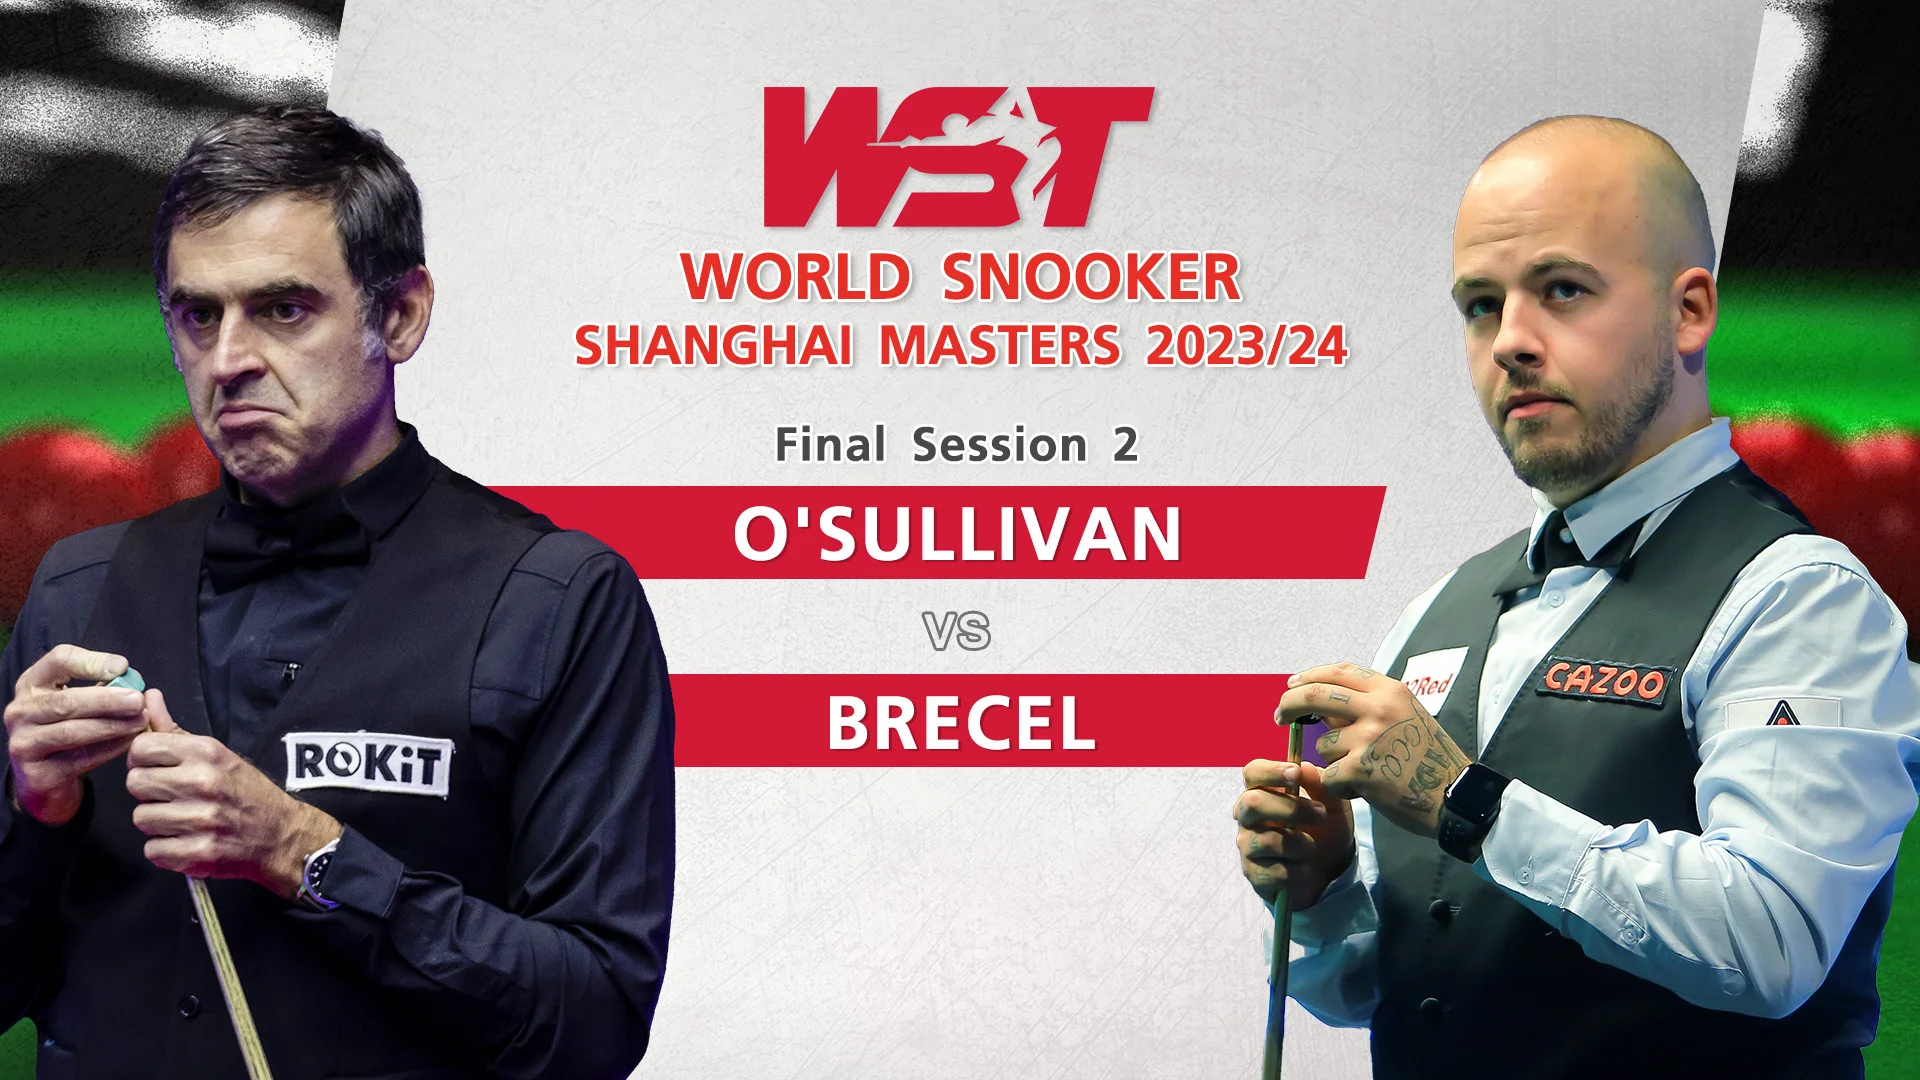 Osullivan VS Brecel Final Session2 World Snooker Shanghai Masters 2023/24 